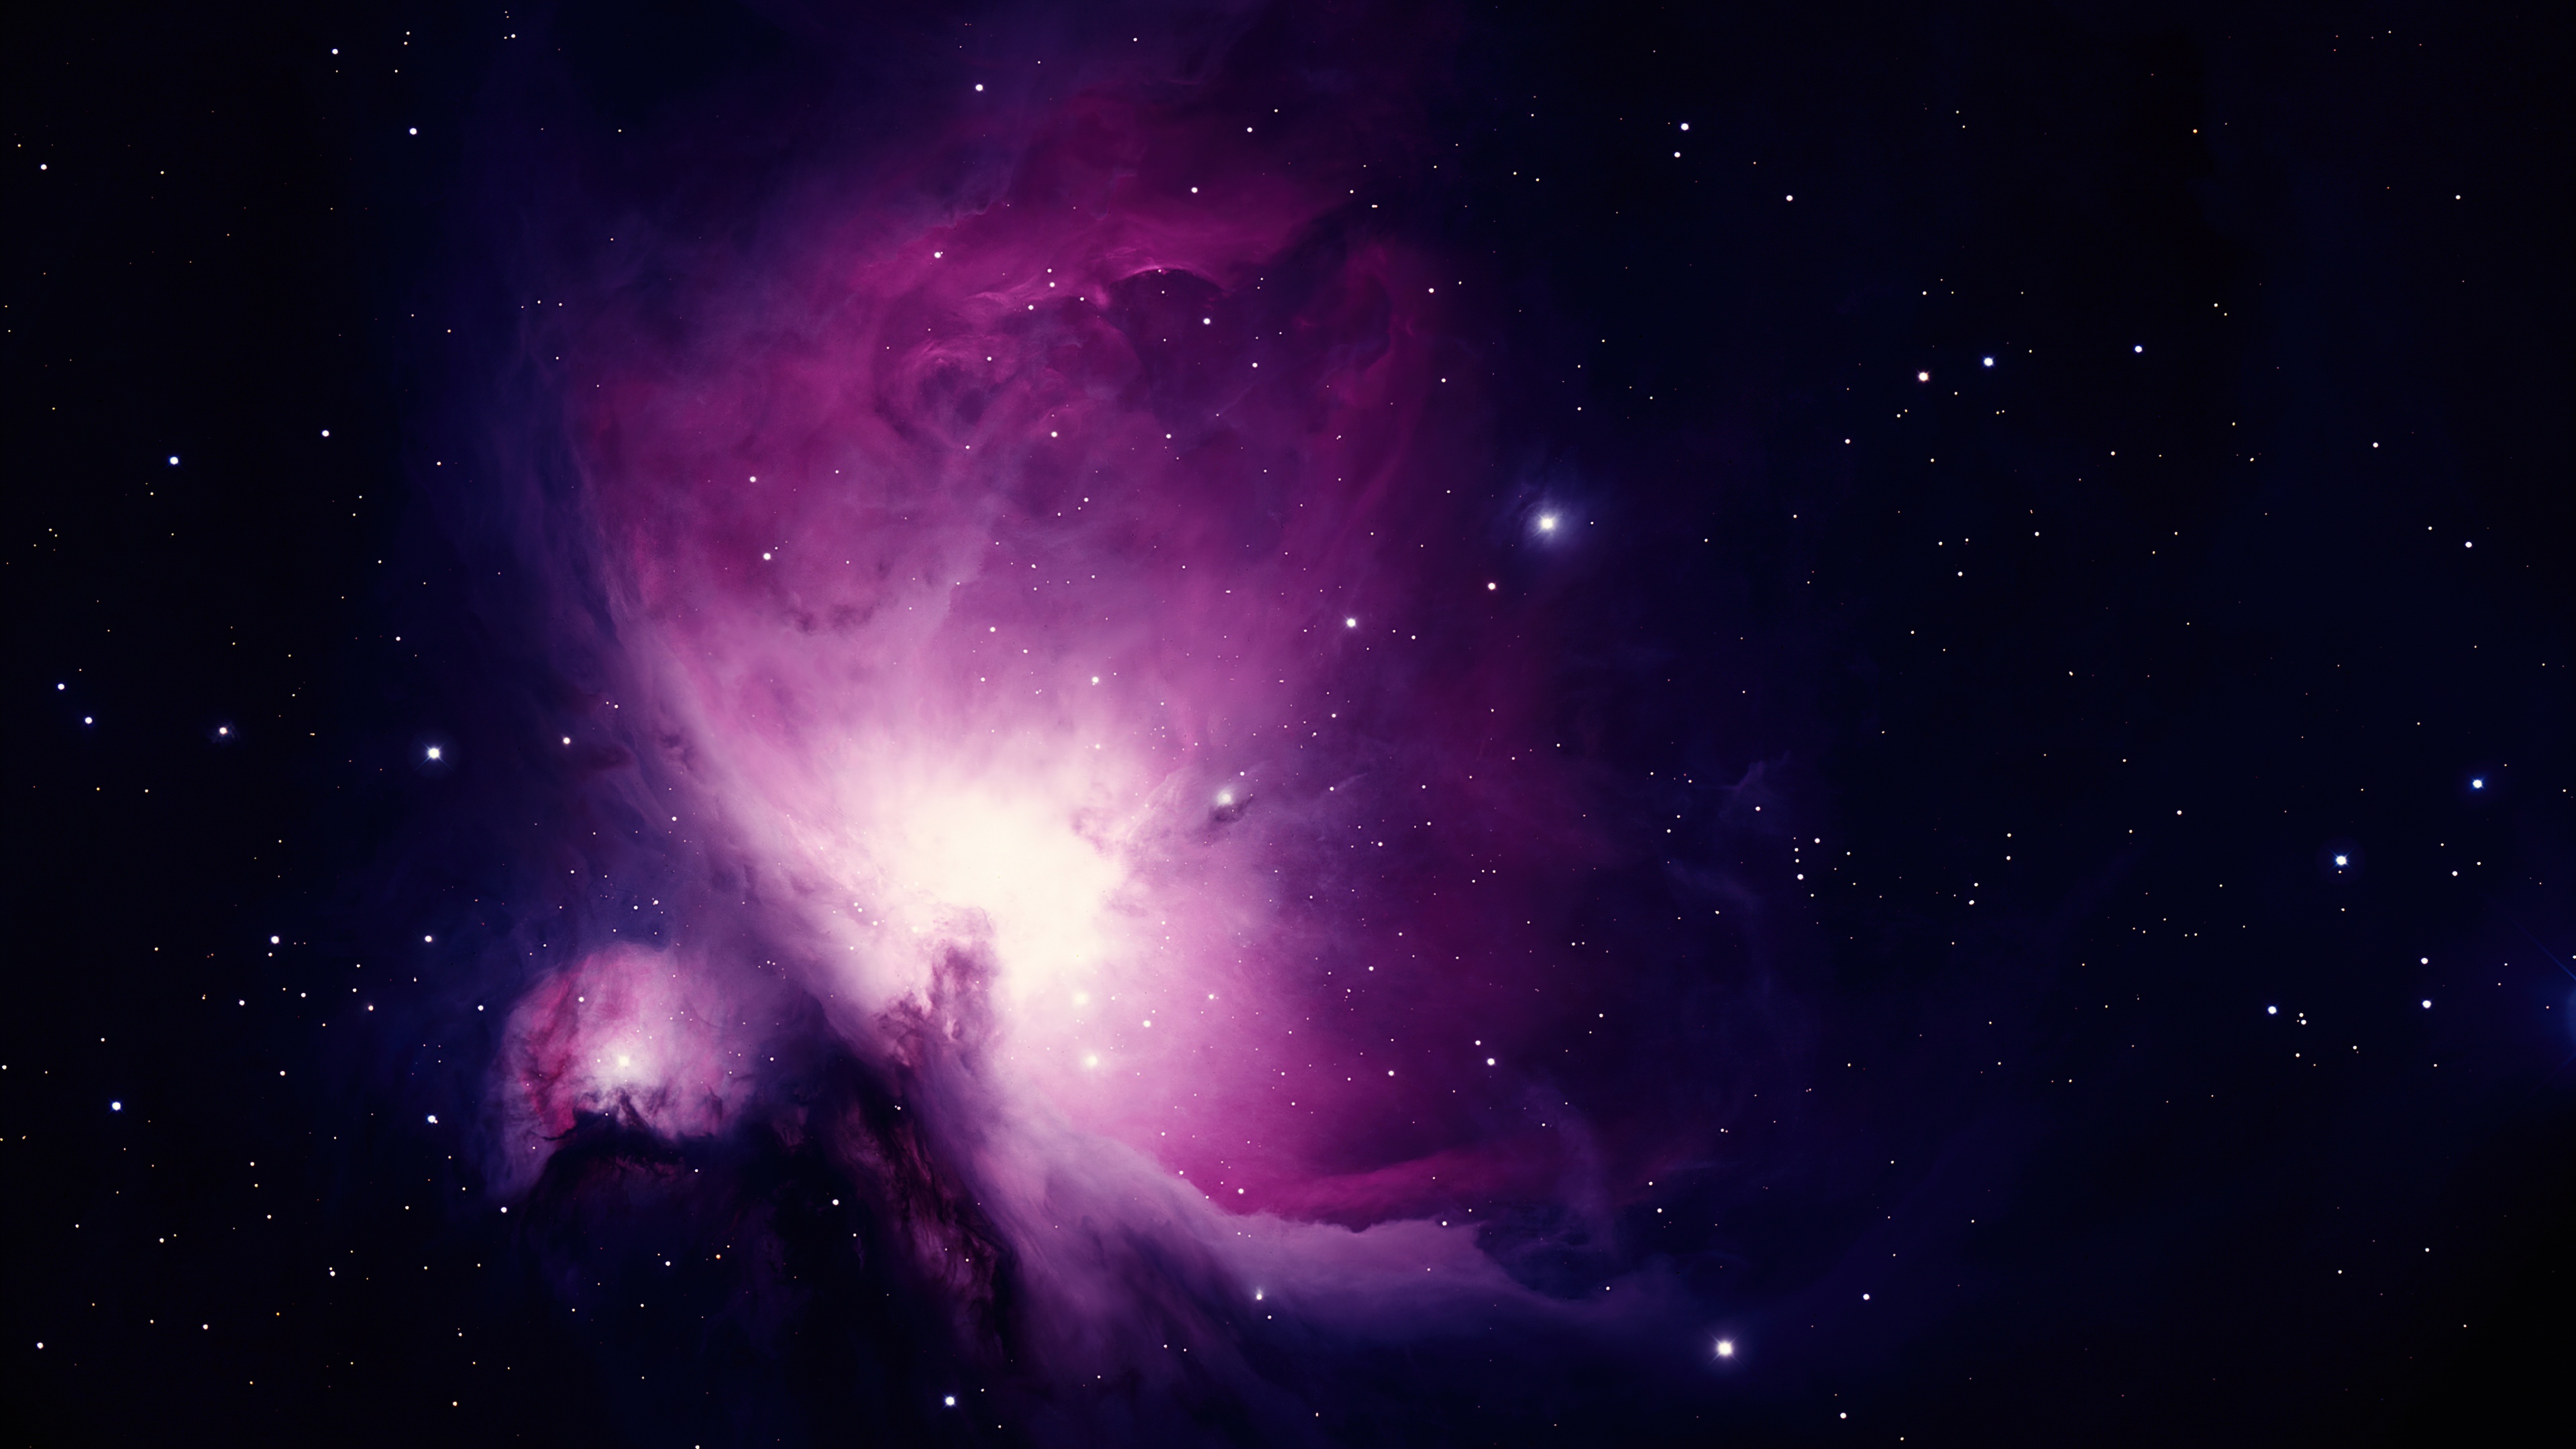 1024 x 576 для ютуба. Галактика туманность Ориона. Галактика Небула. Космос звезды Галактика туманность. Обои космос.